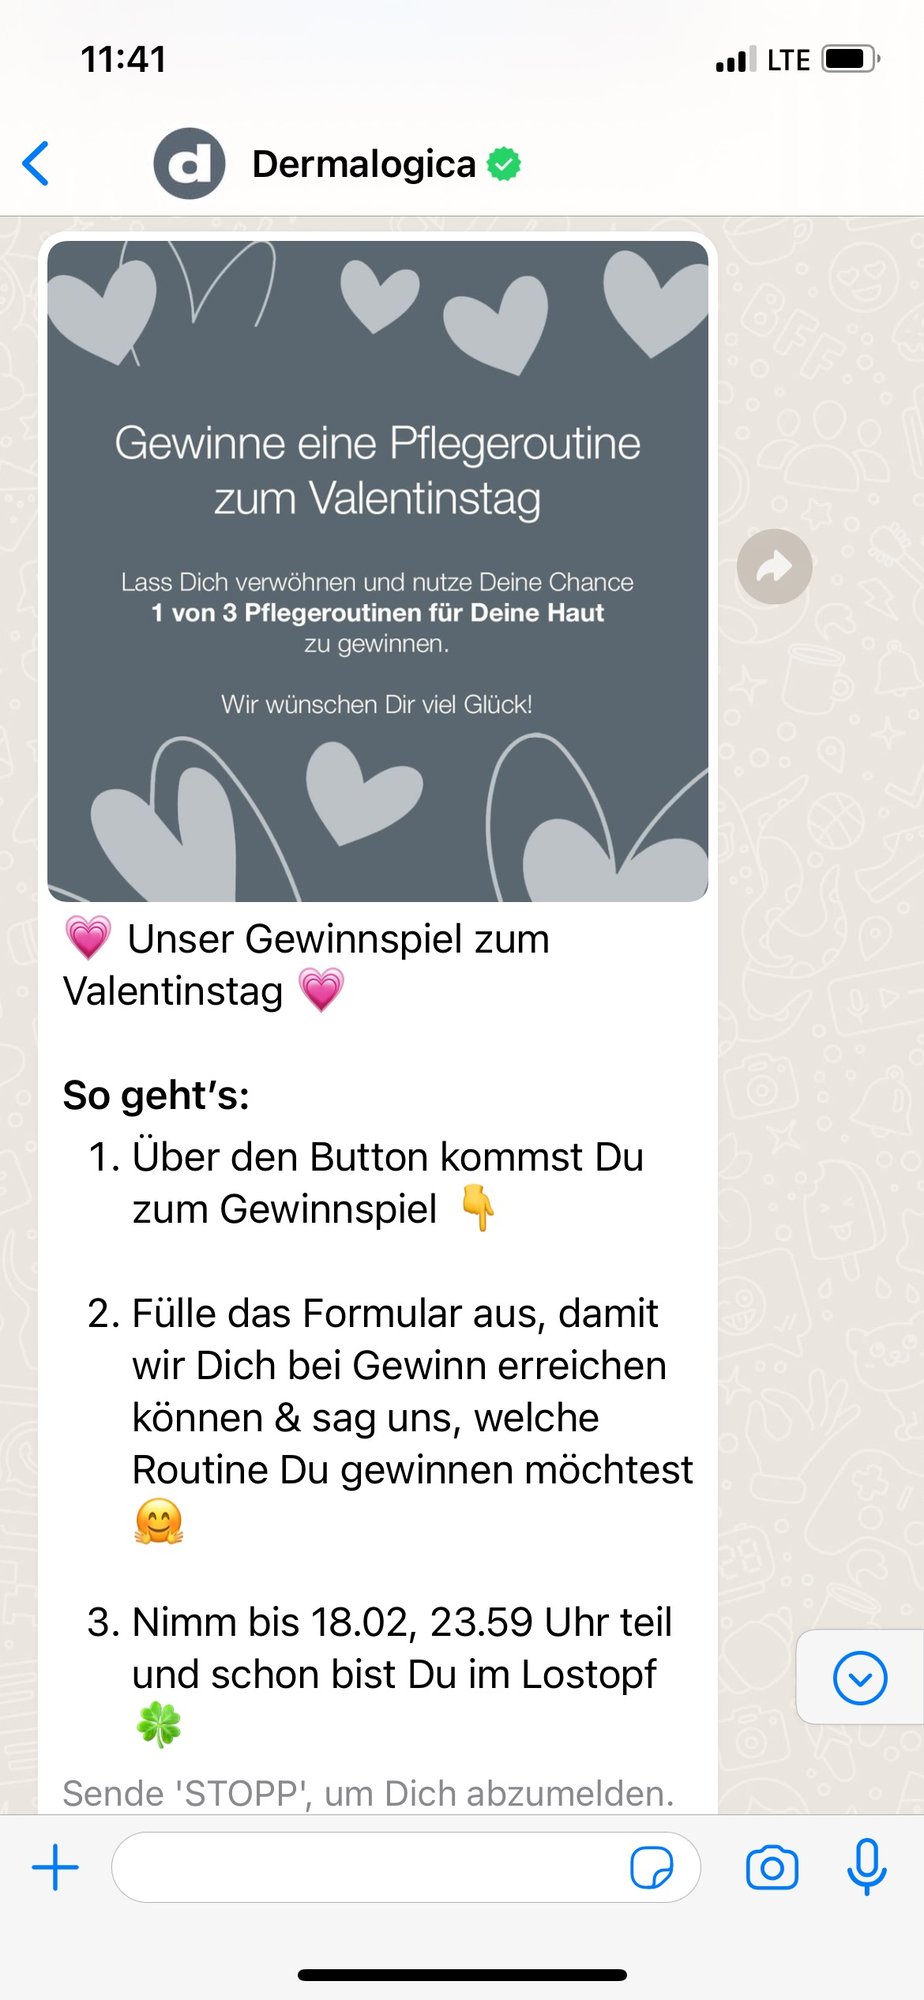 Dermalogica WhatsApp marketing campaign Valentines